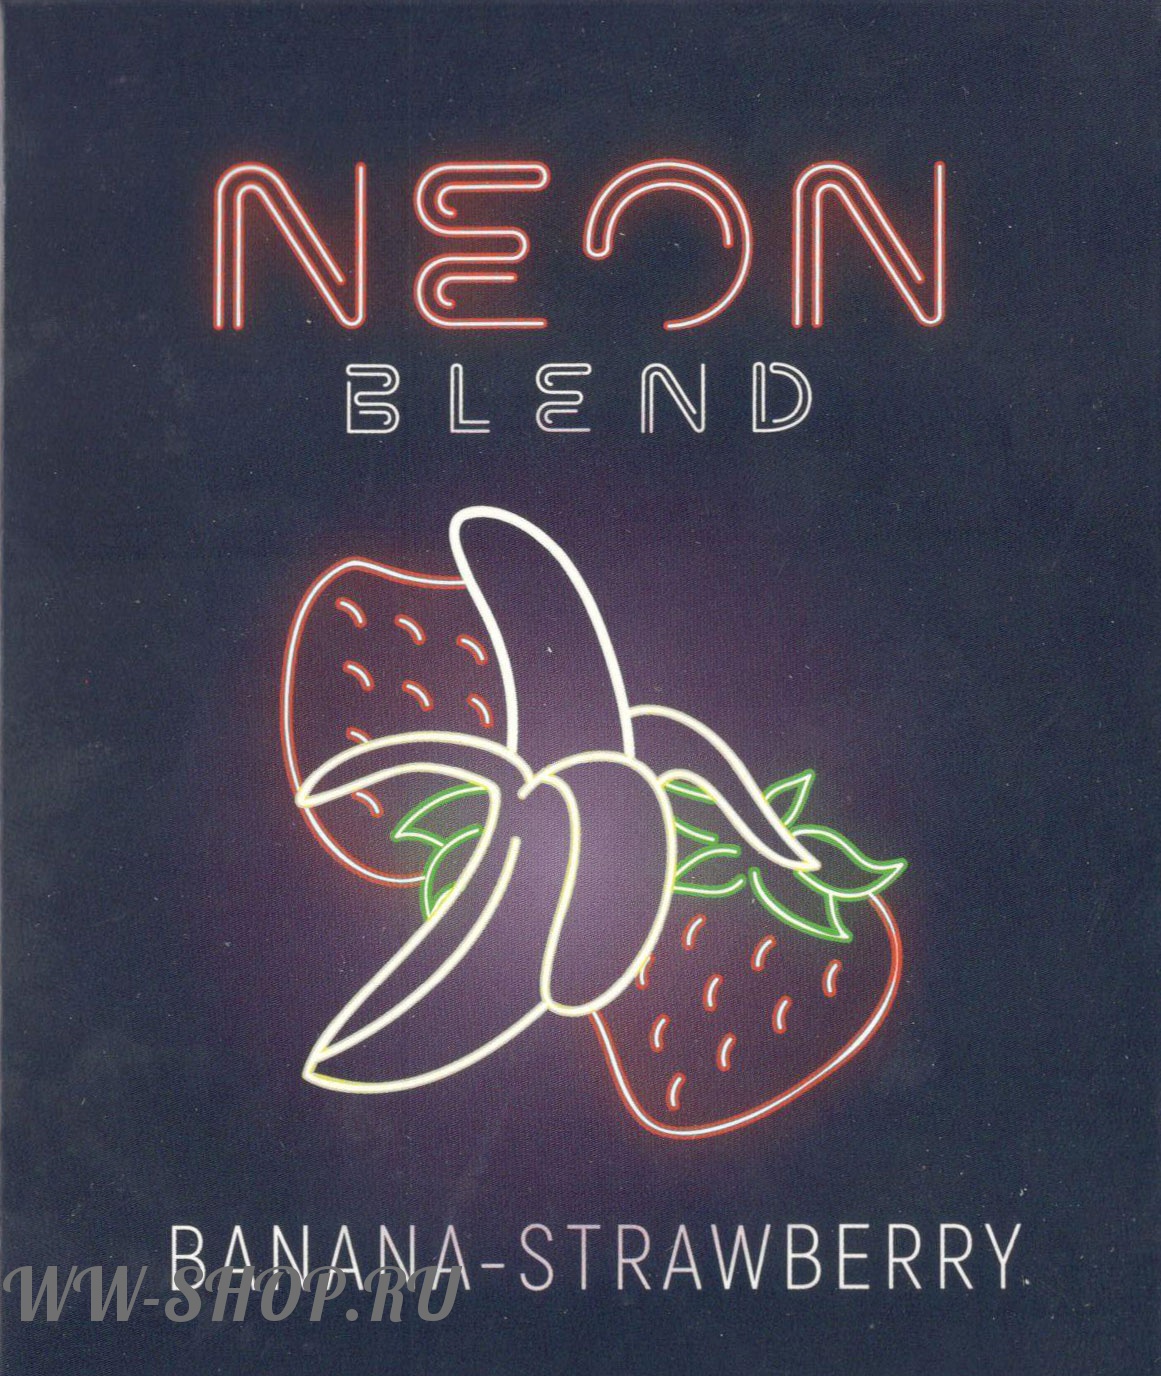 neon- клуб с бананом (strawberry banana) Пермь